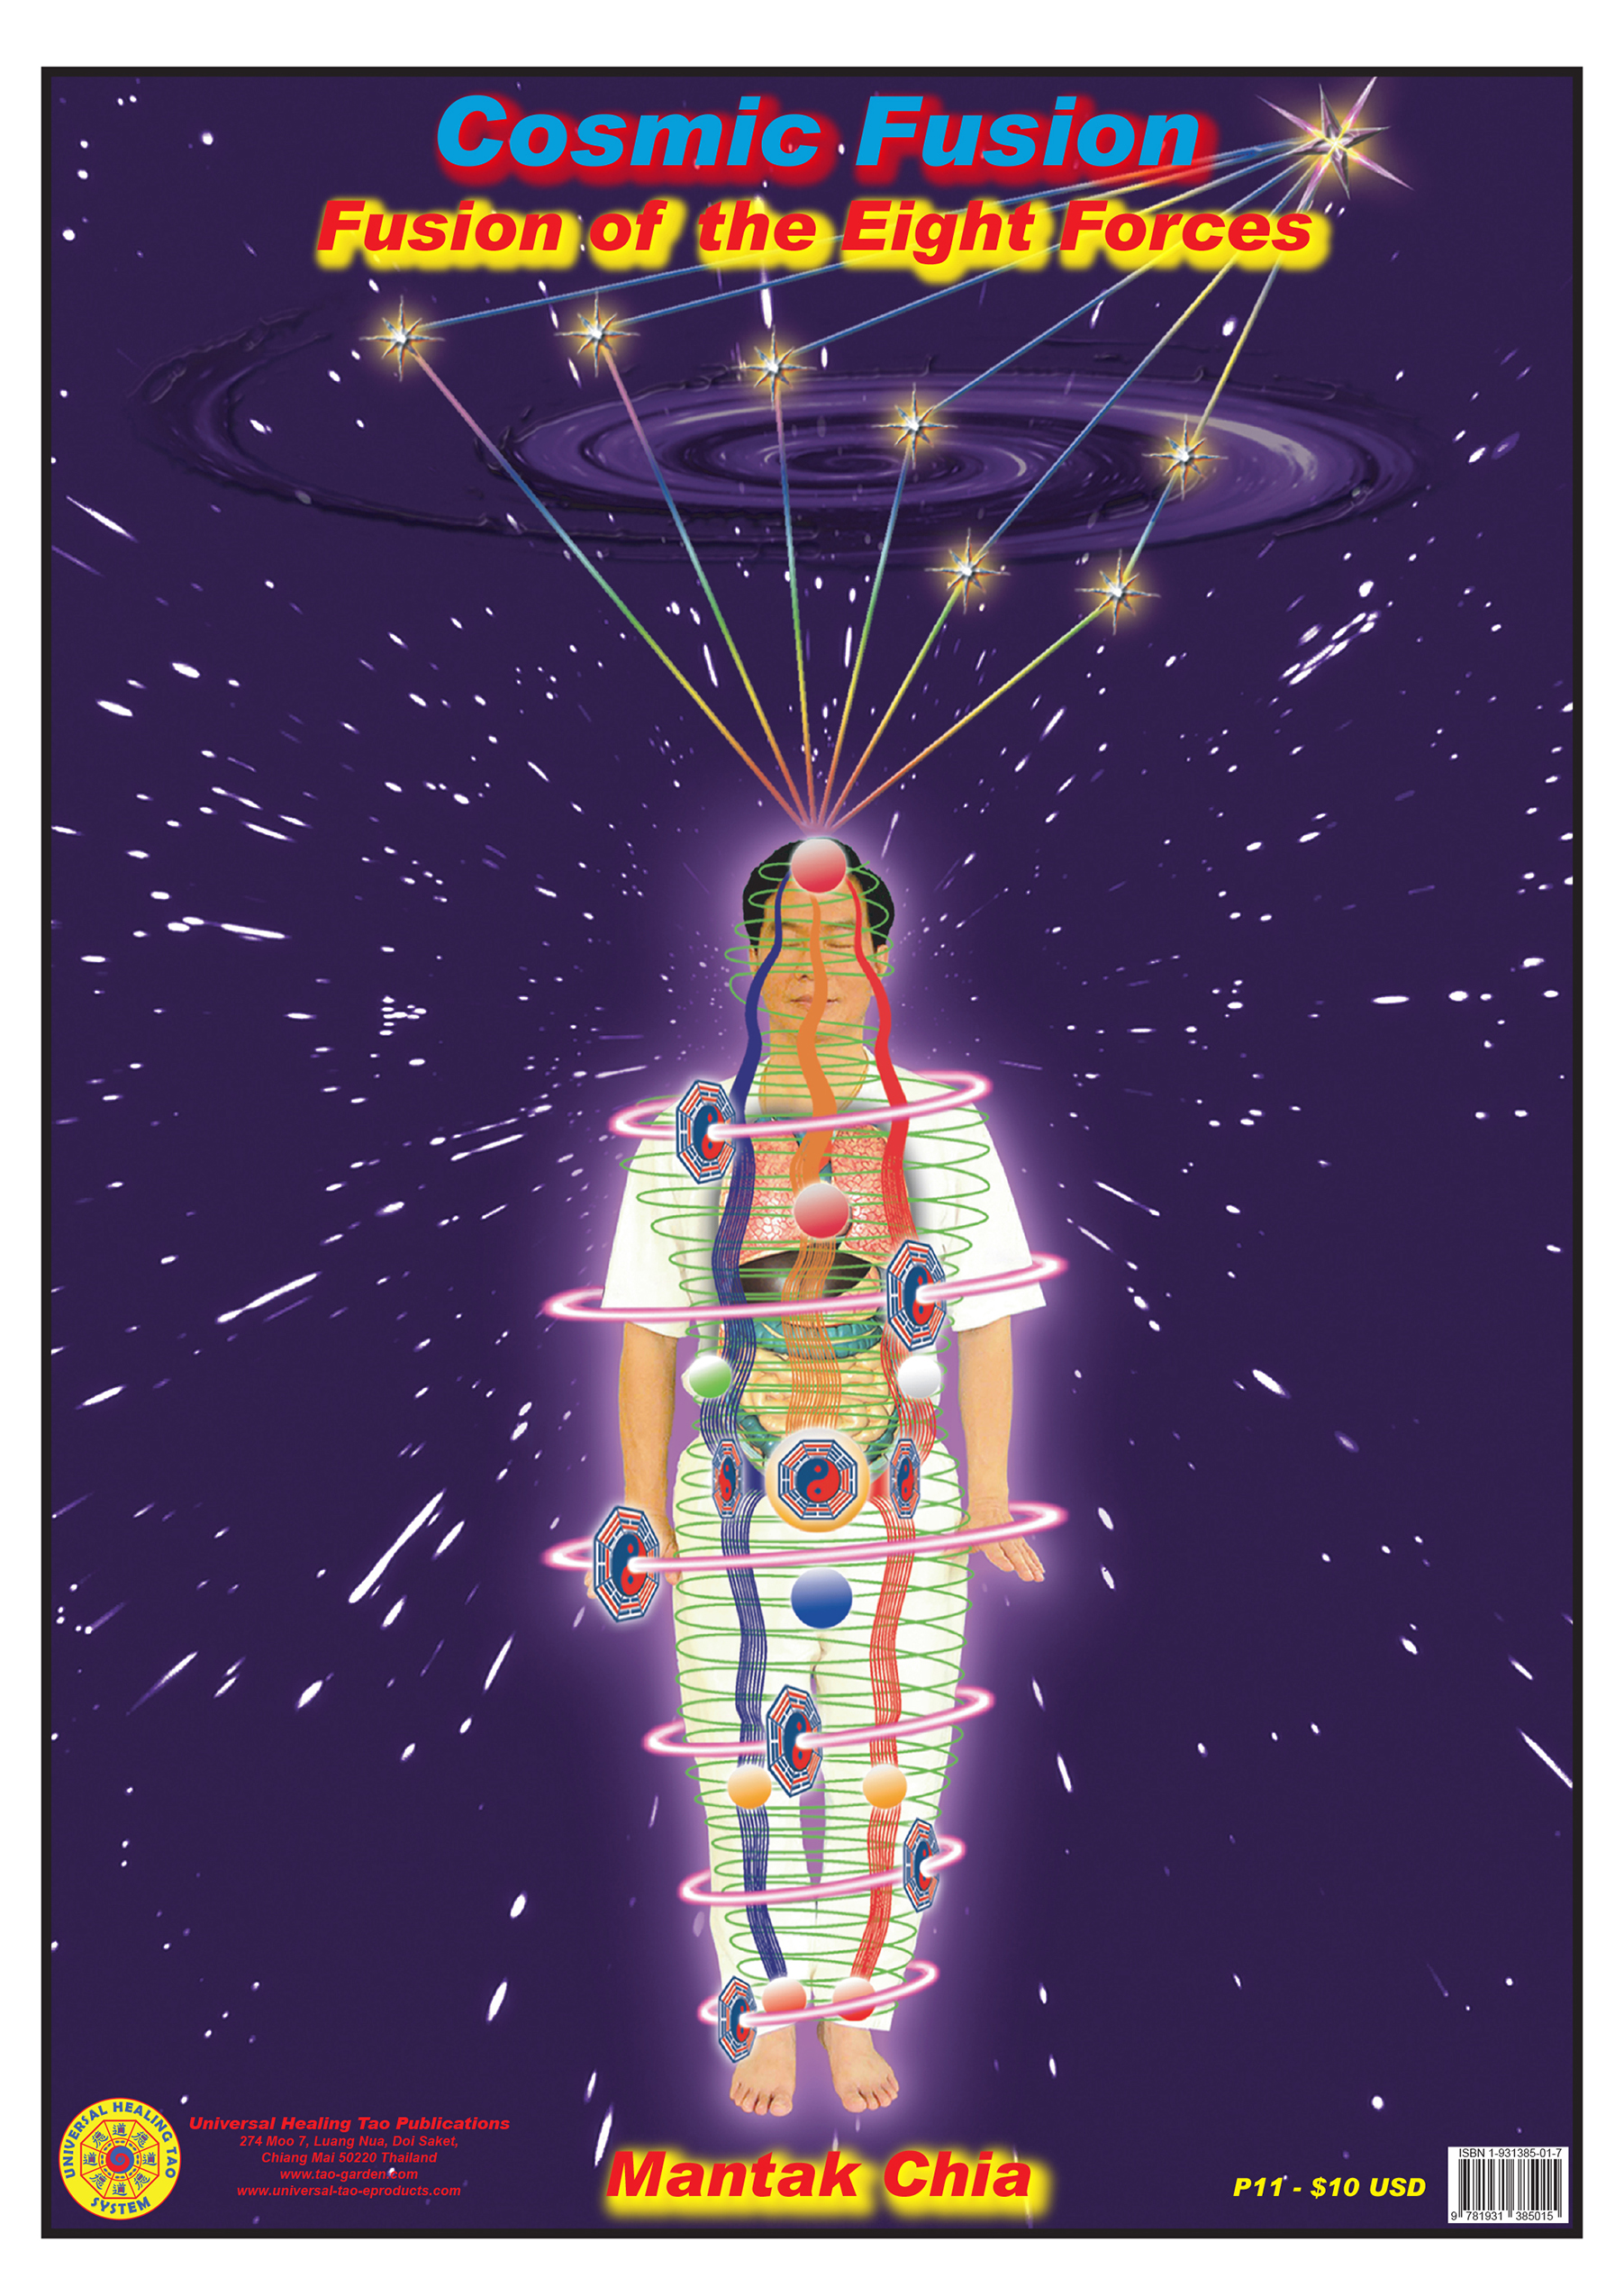 Cosmic Fusion (E-Poster) [DL-P11]